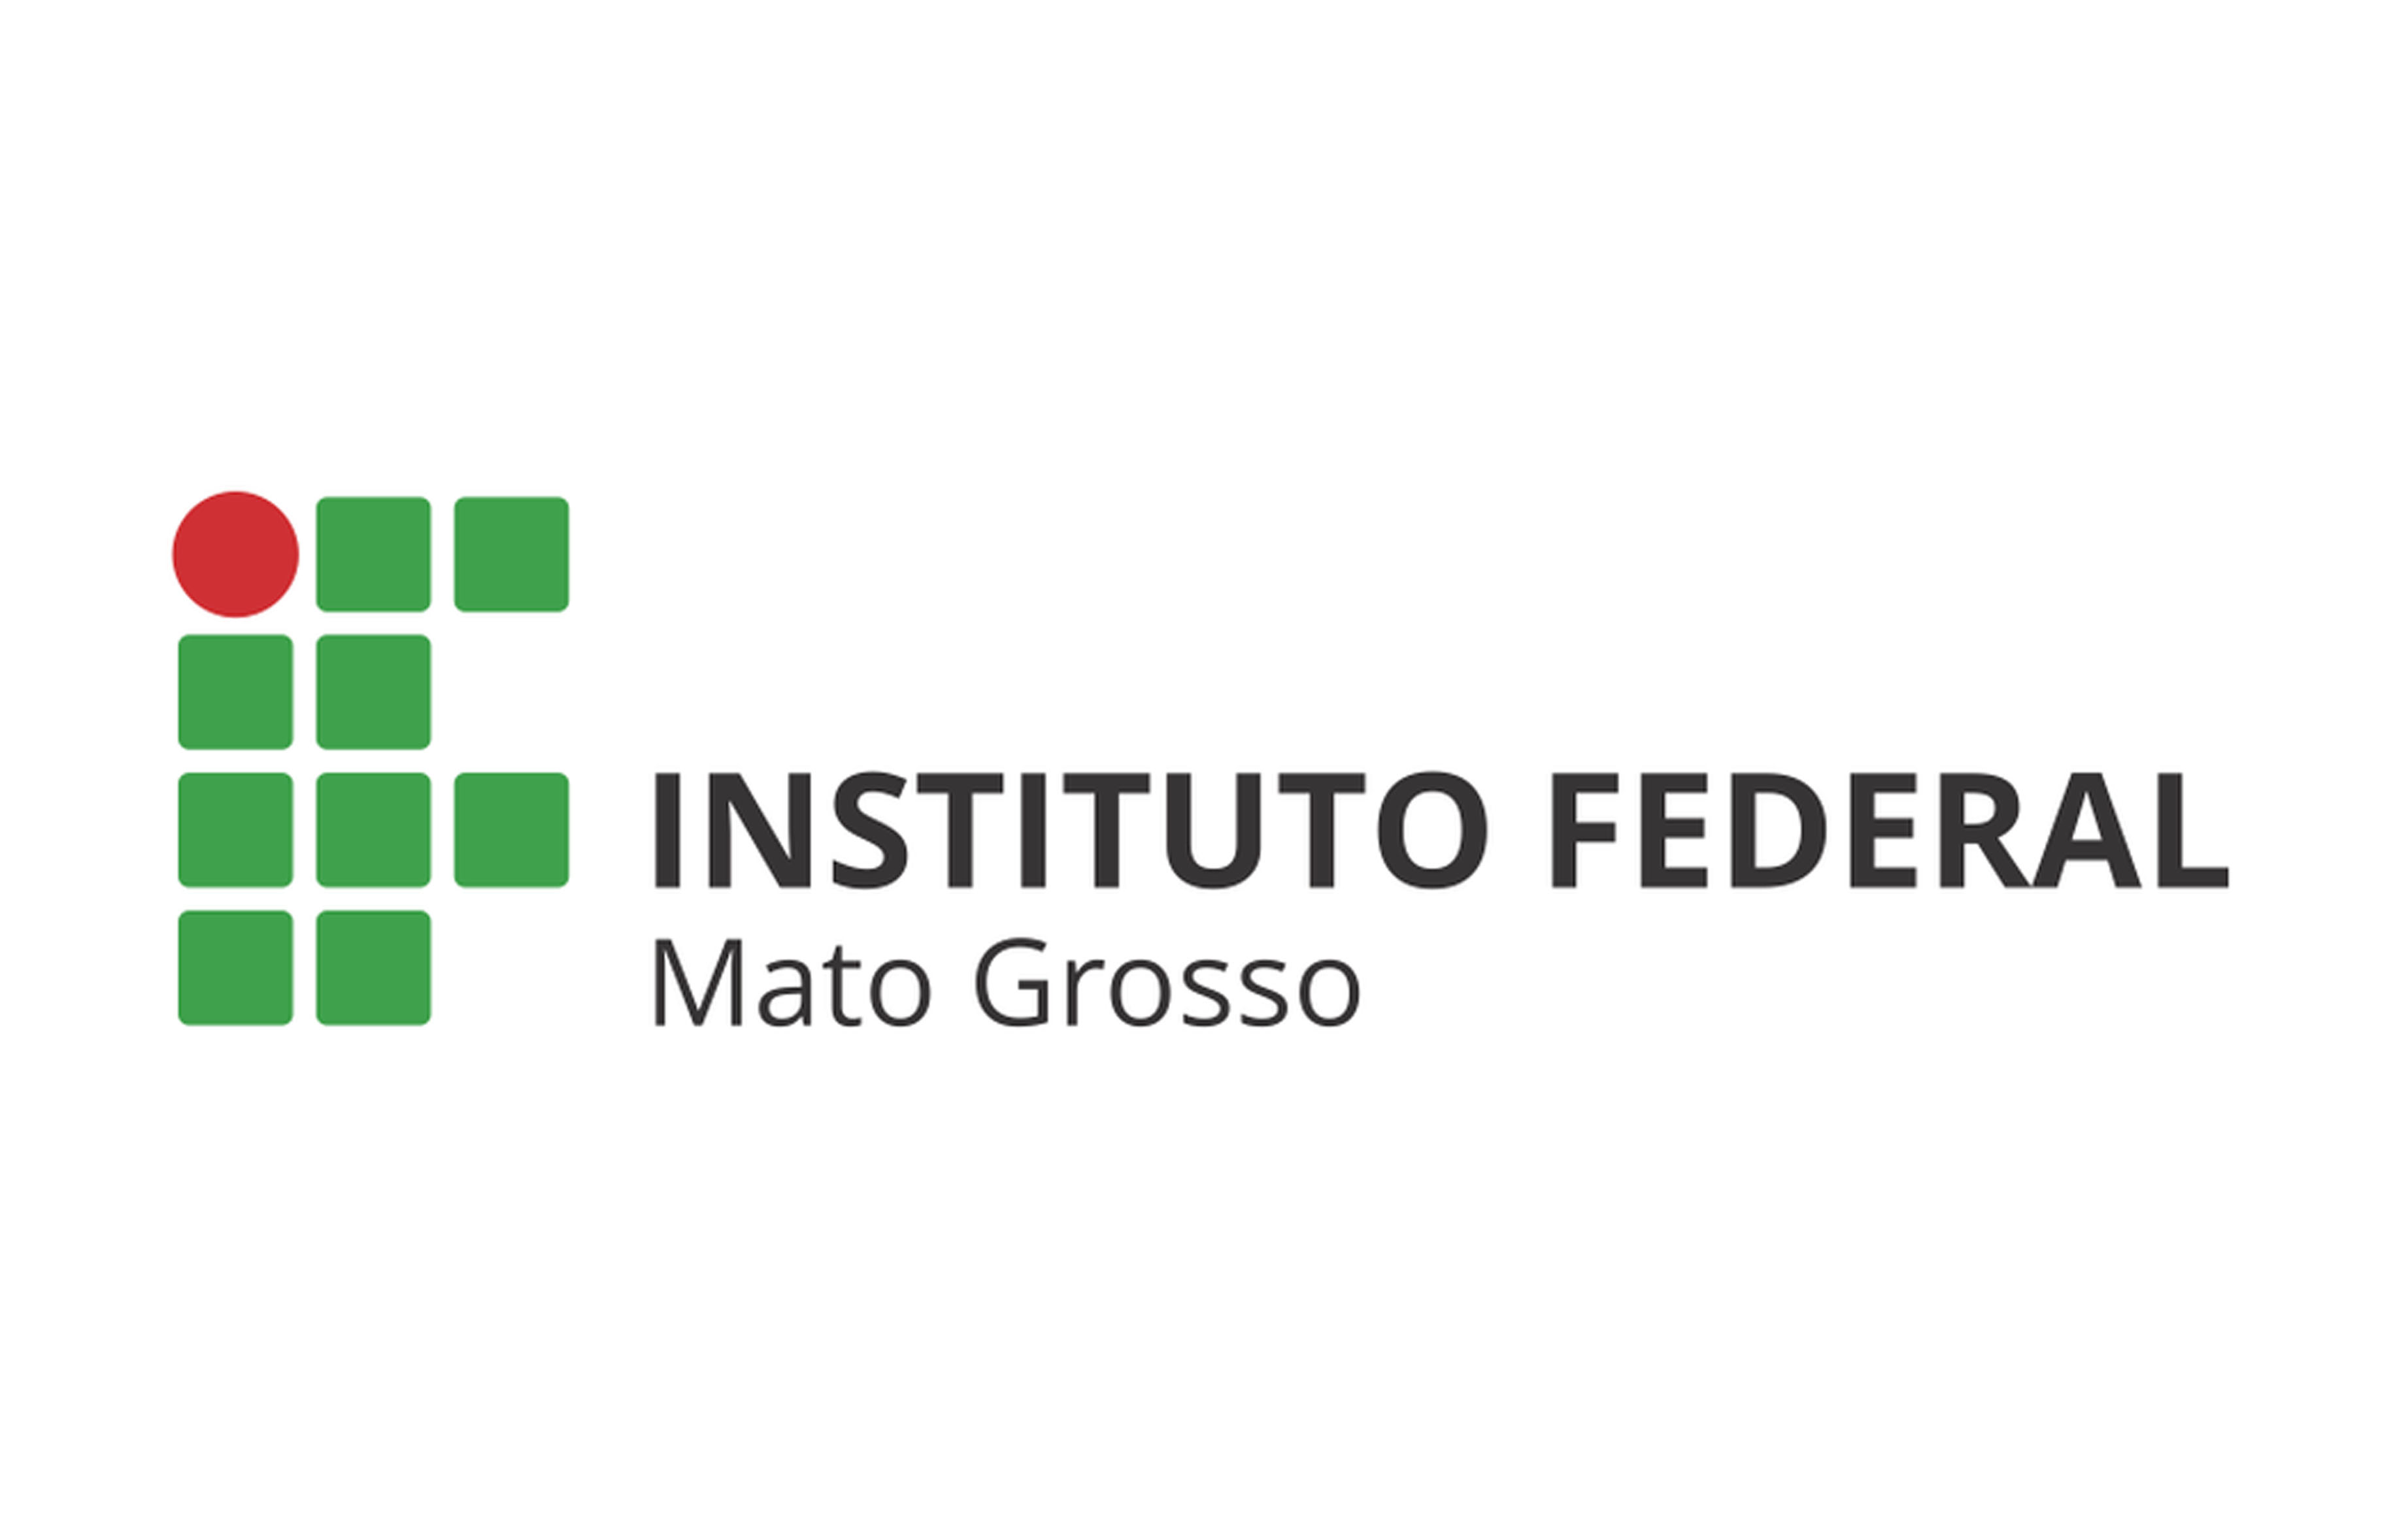 logo ifmt